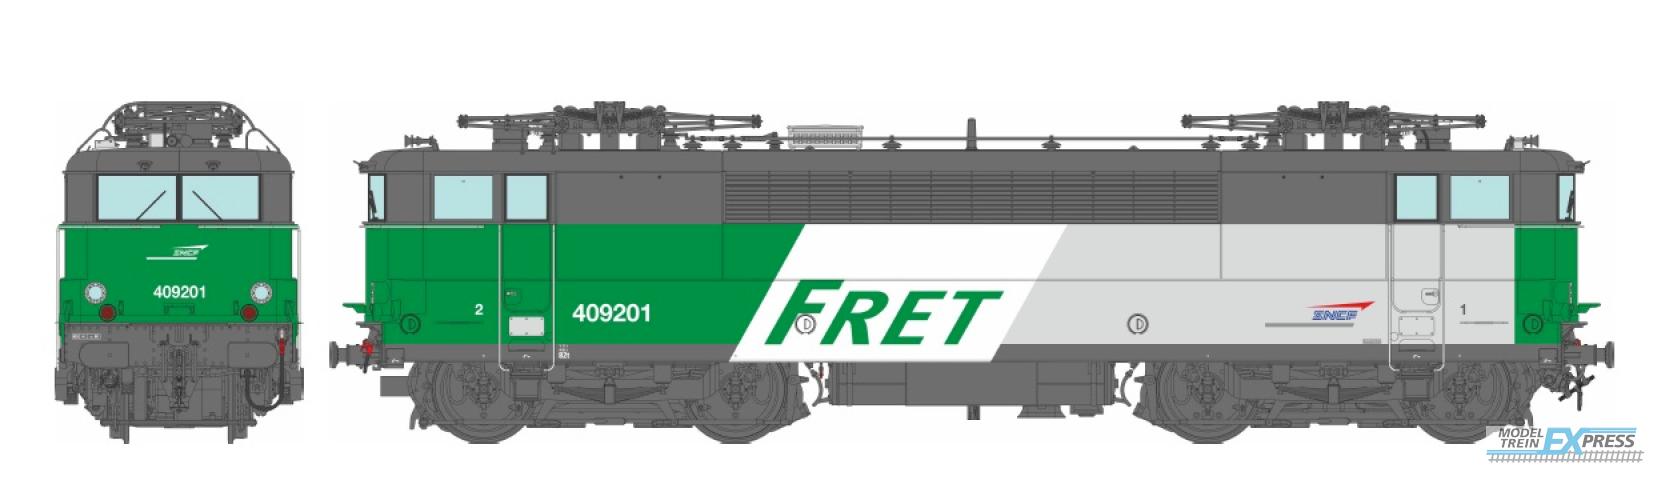 REE models MB-198 BB 9201 "FRET" Livery TOURS-ST-PIERRE Era V - ANALOG DC